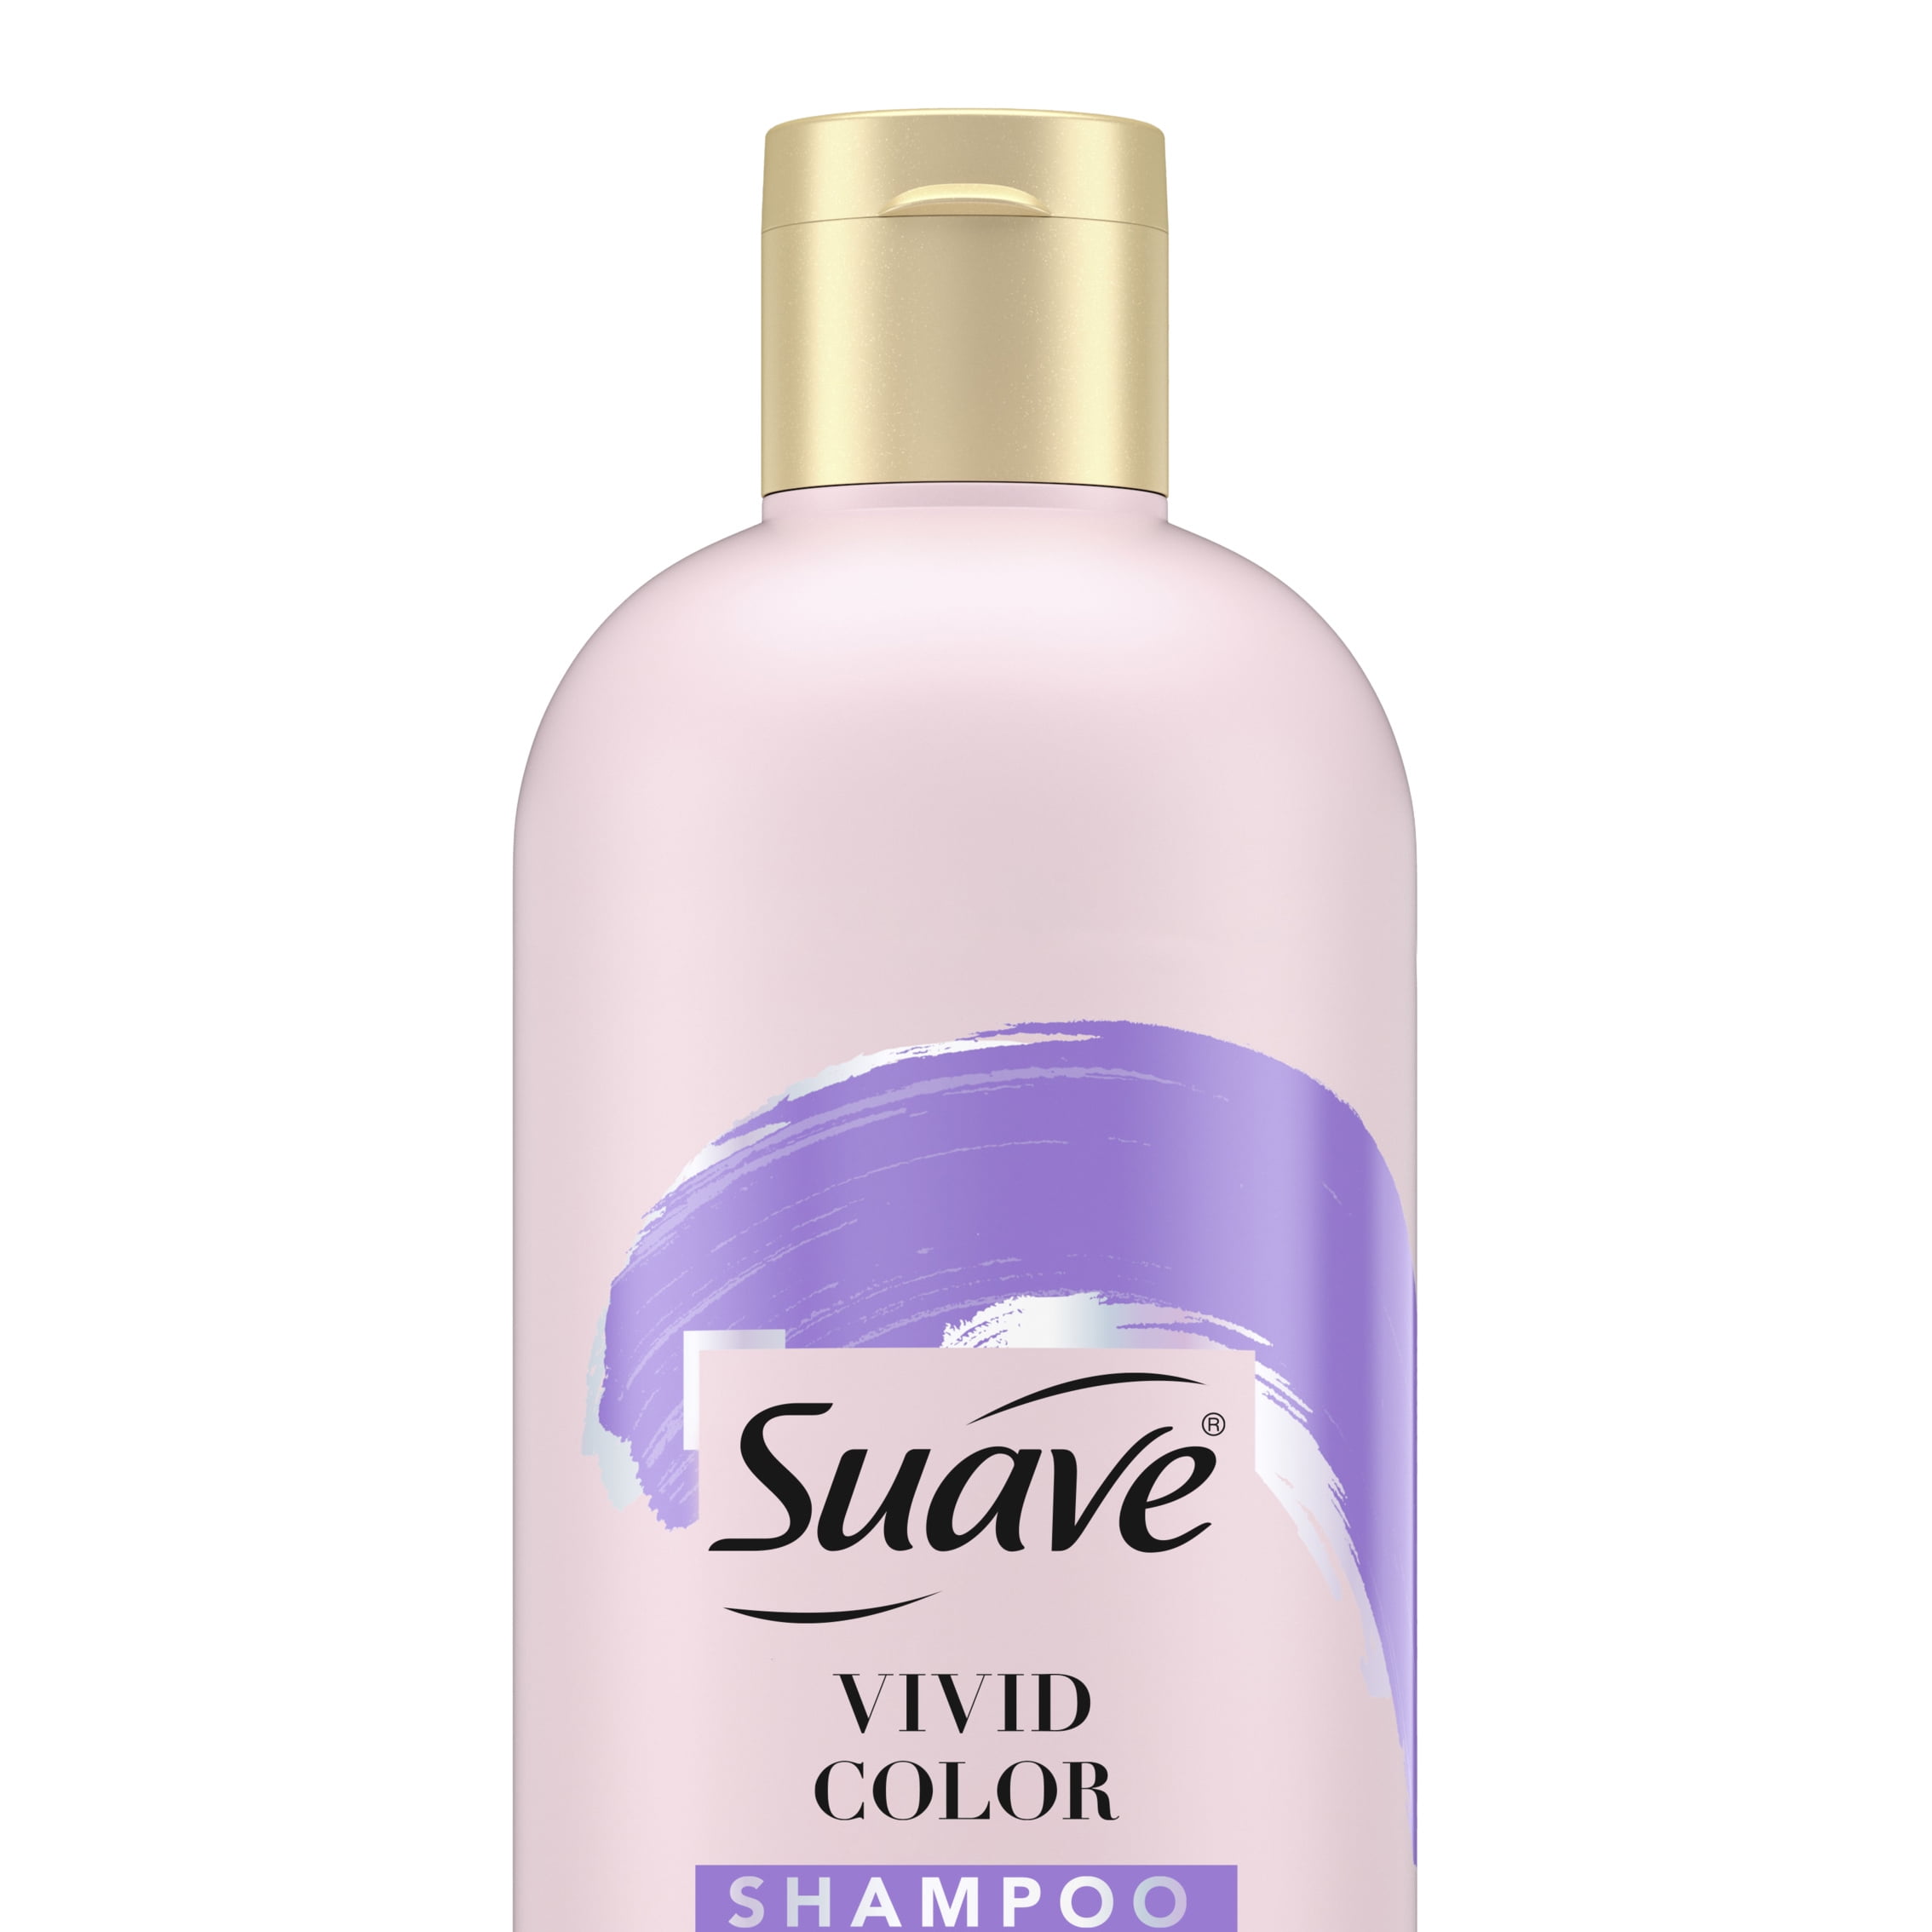 Suave Vivid Color with Amino Acid Complex Shampoo 16.5 fl oz